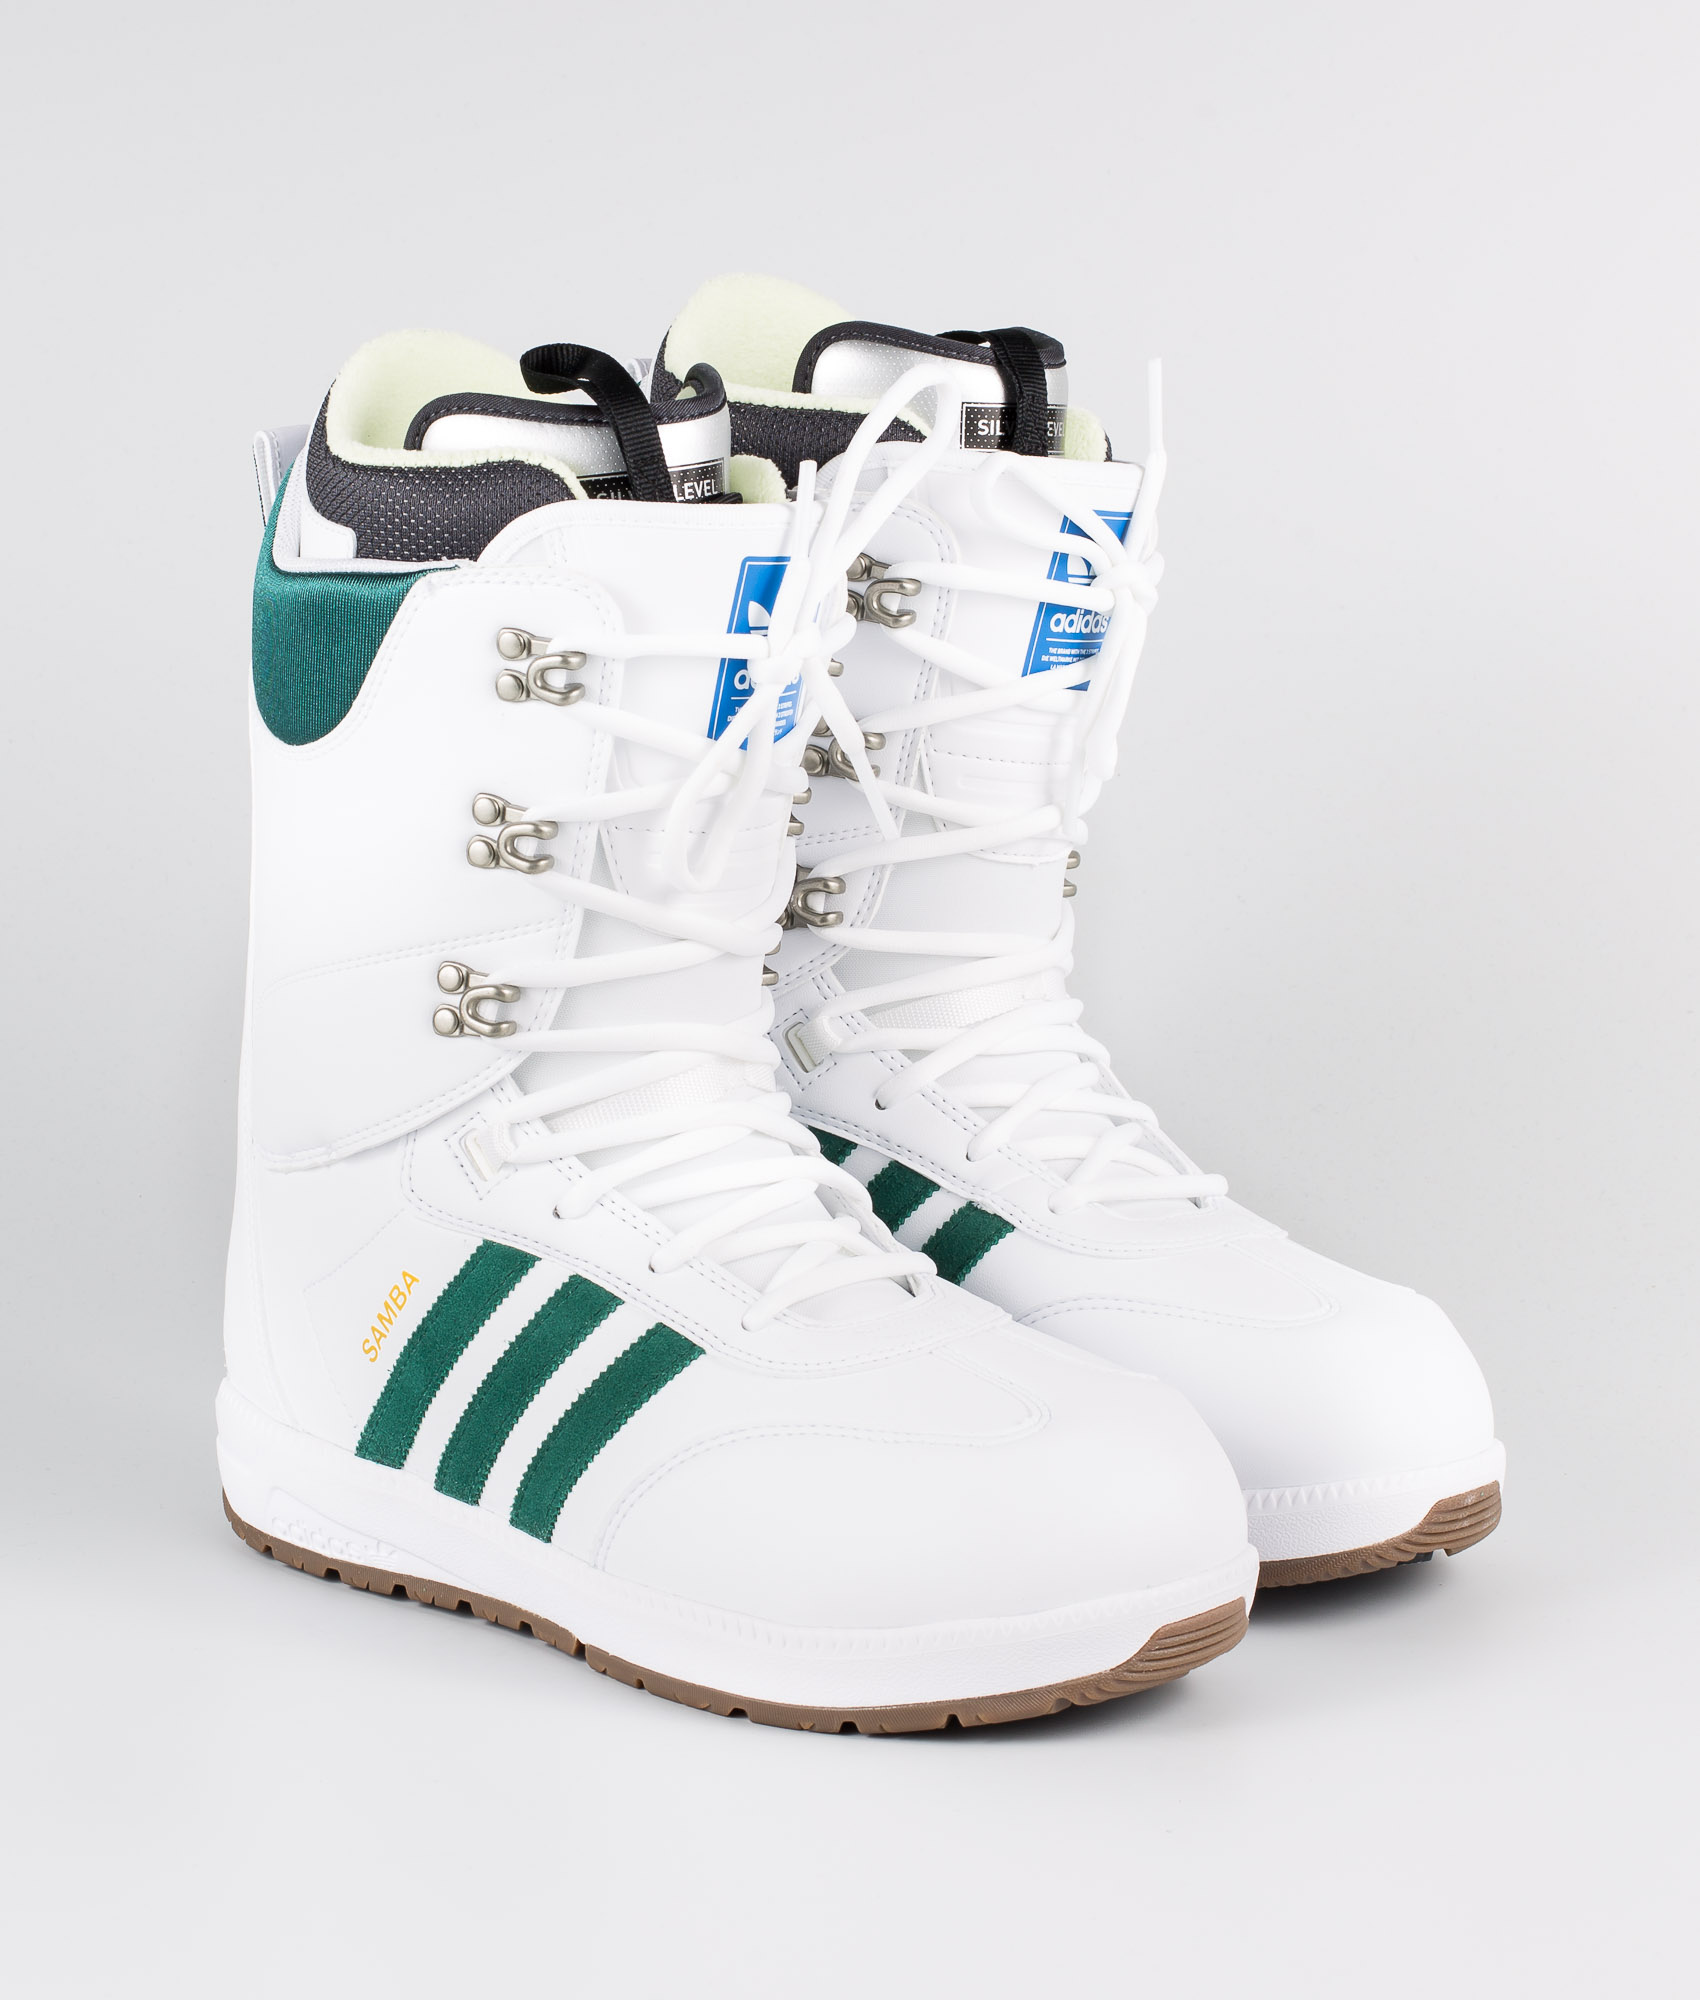 adidas boa snowboard boots